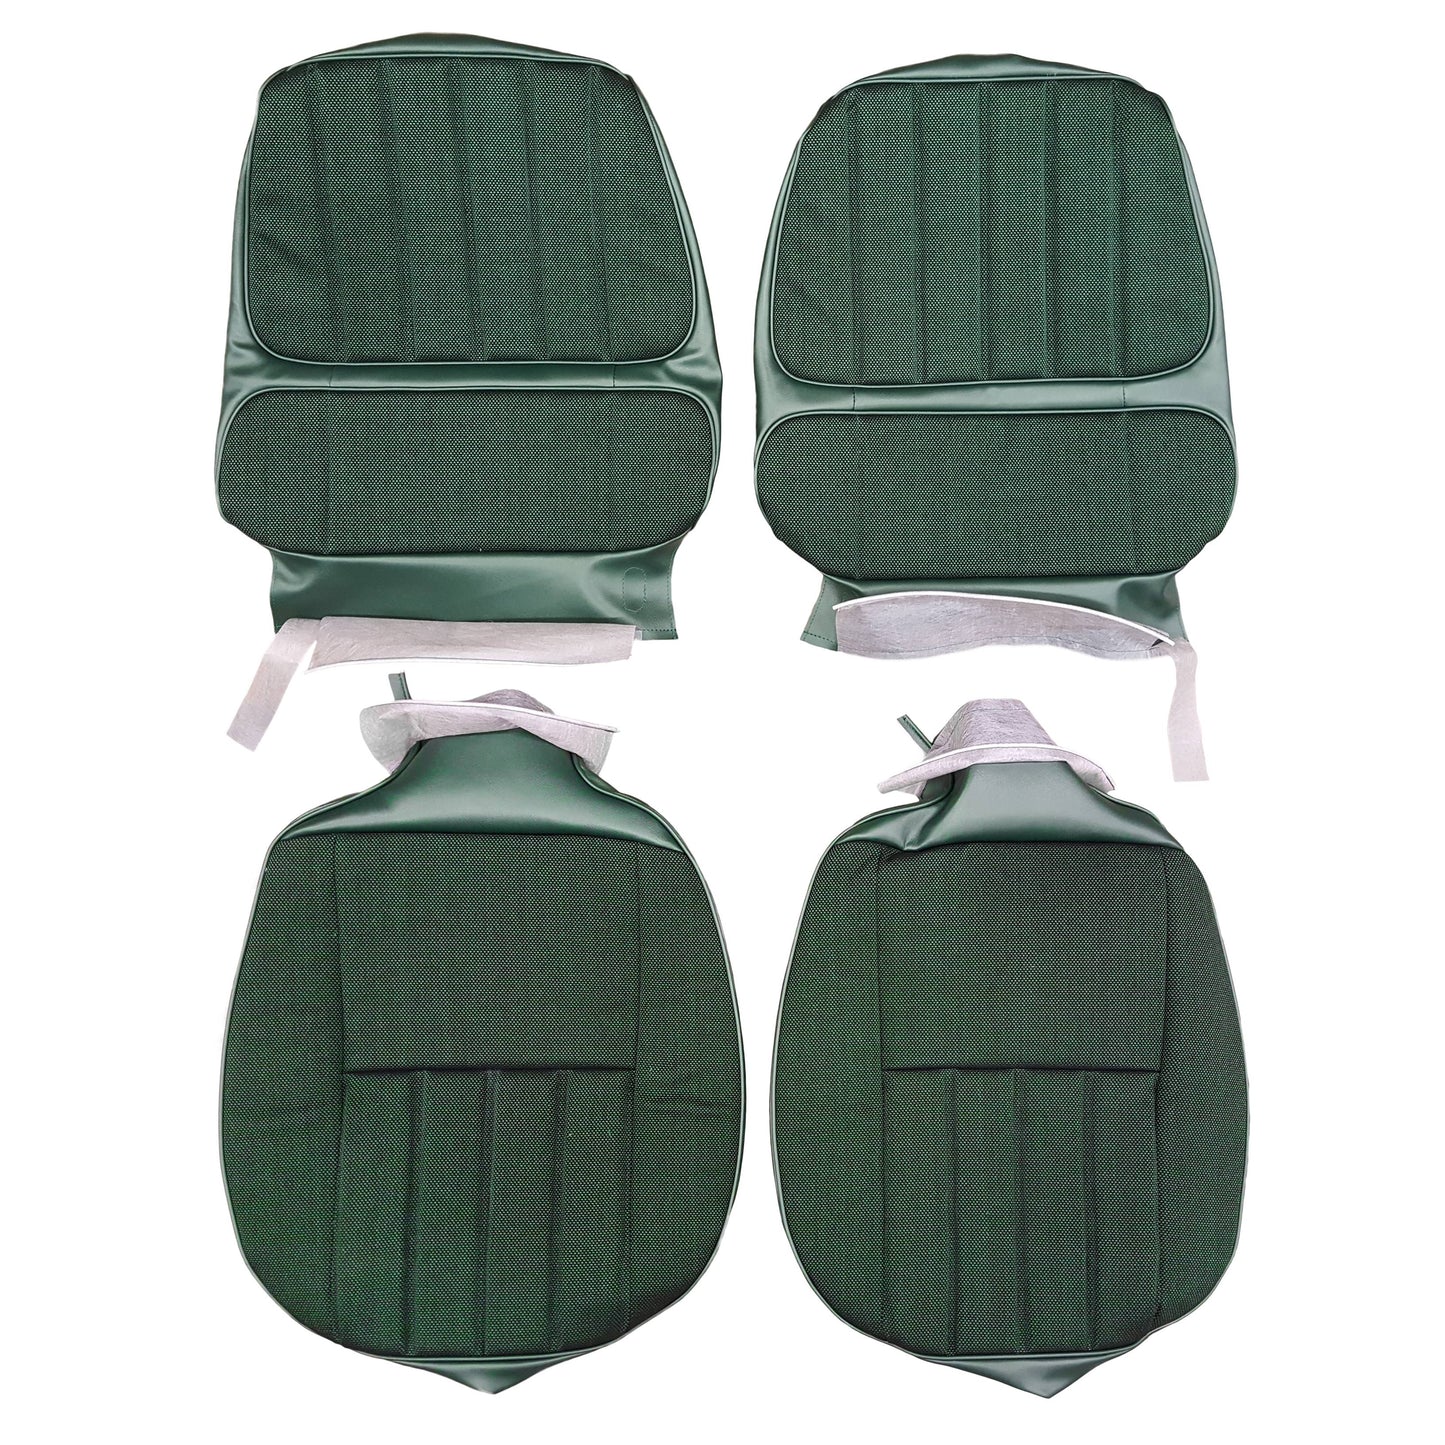 70 CAMARO DELUXE CLOTH BUCKET SEATS UPH SRMGRN/BLK S&P/GREEN